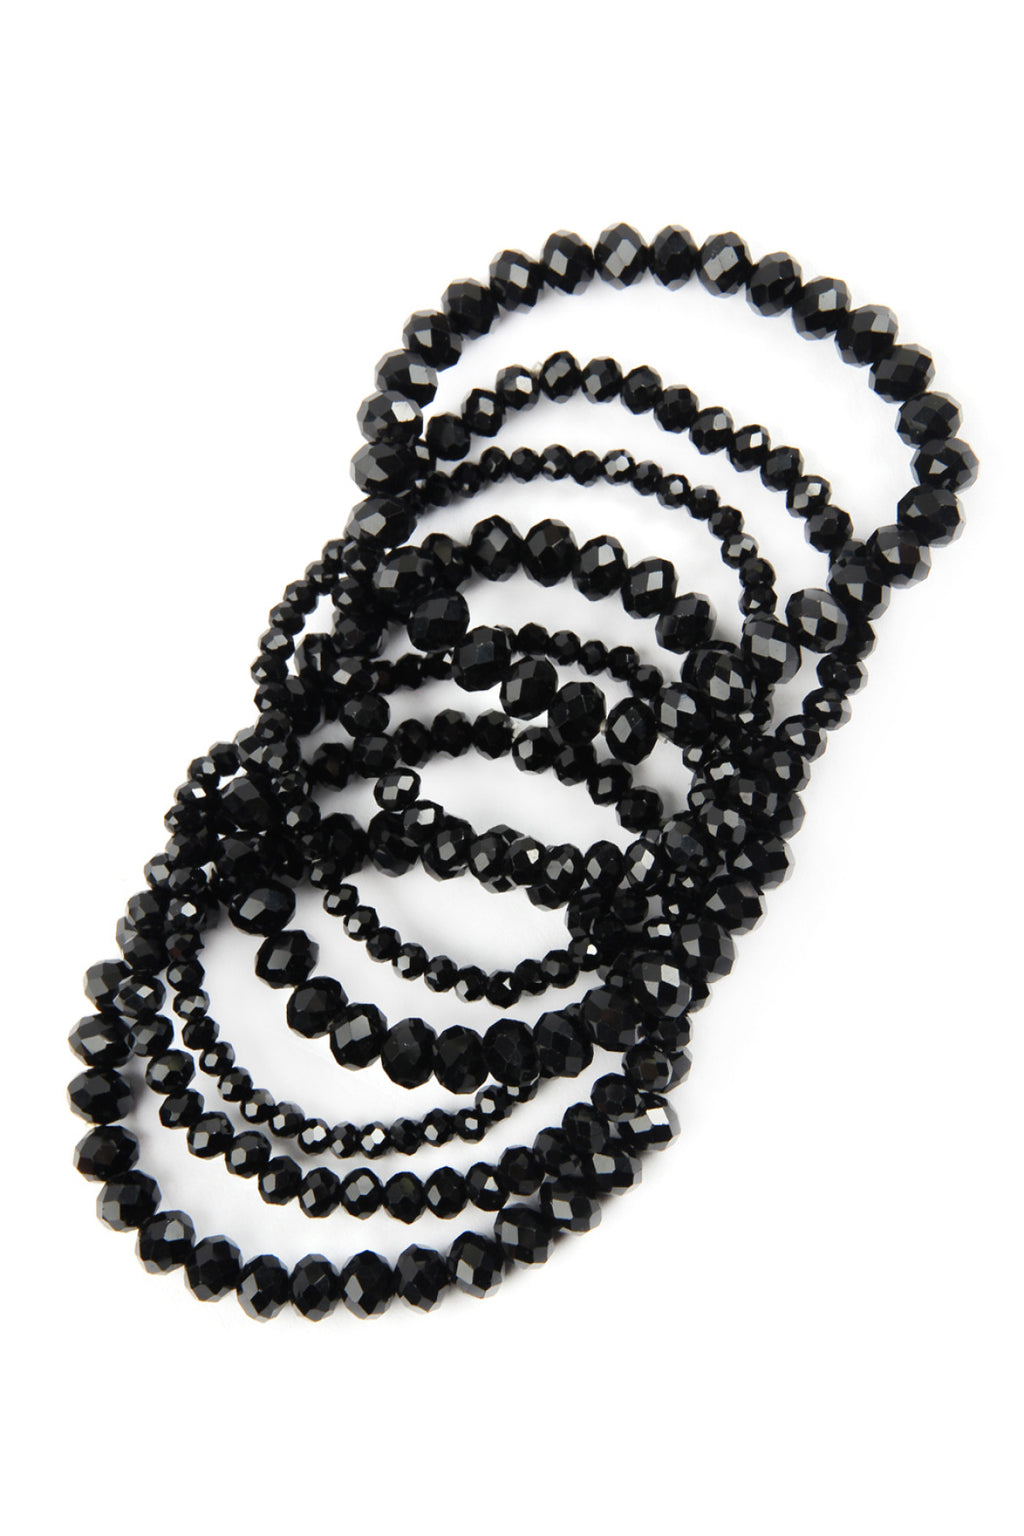 Jet Black Seven Lines Glass Beads Stretch Bracelet - Pack of 6